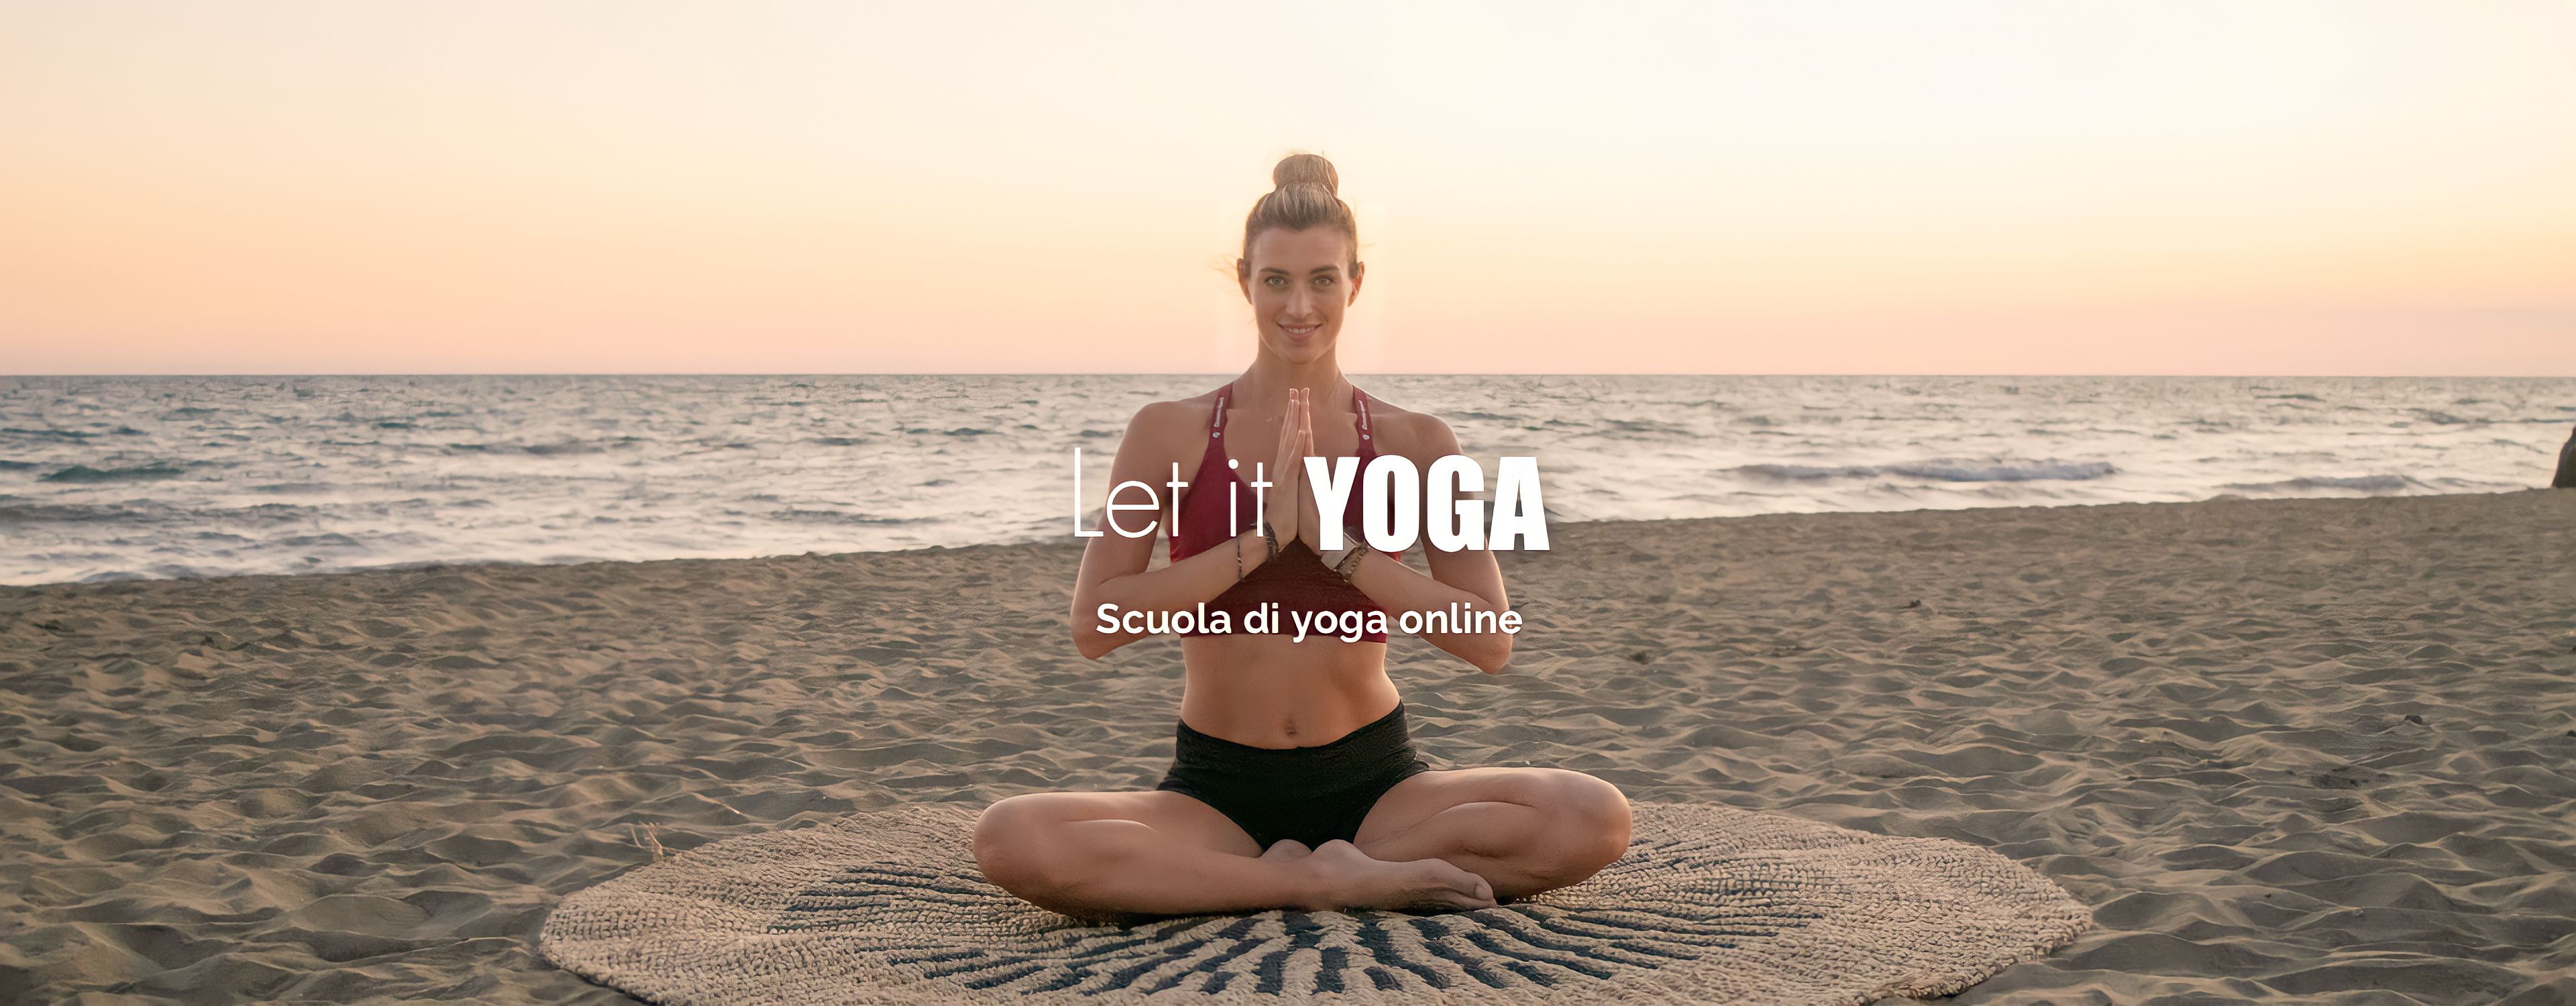 Let it Yoga scuola yoga online